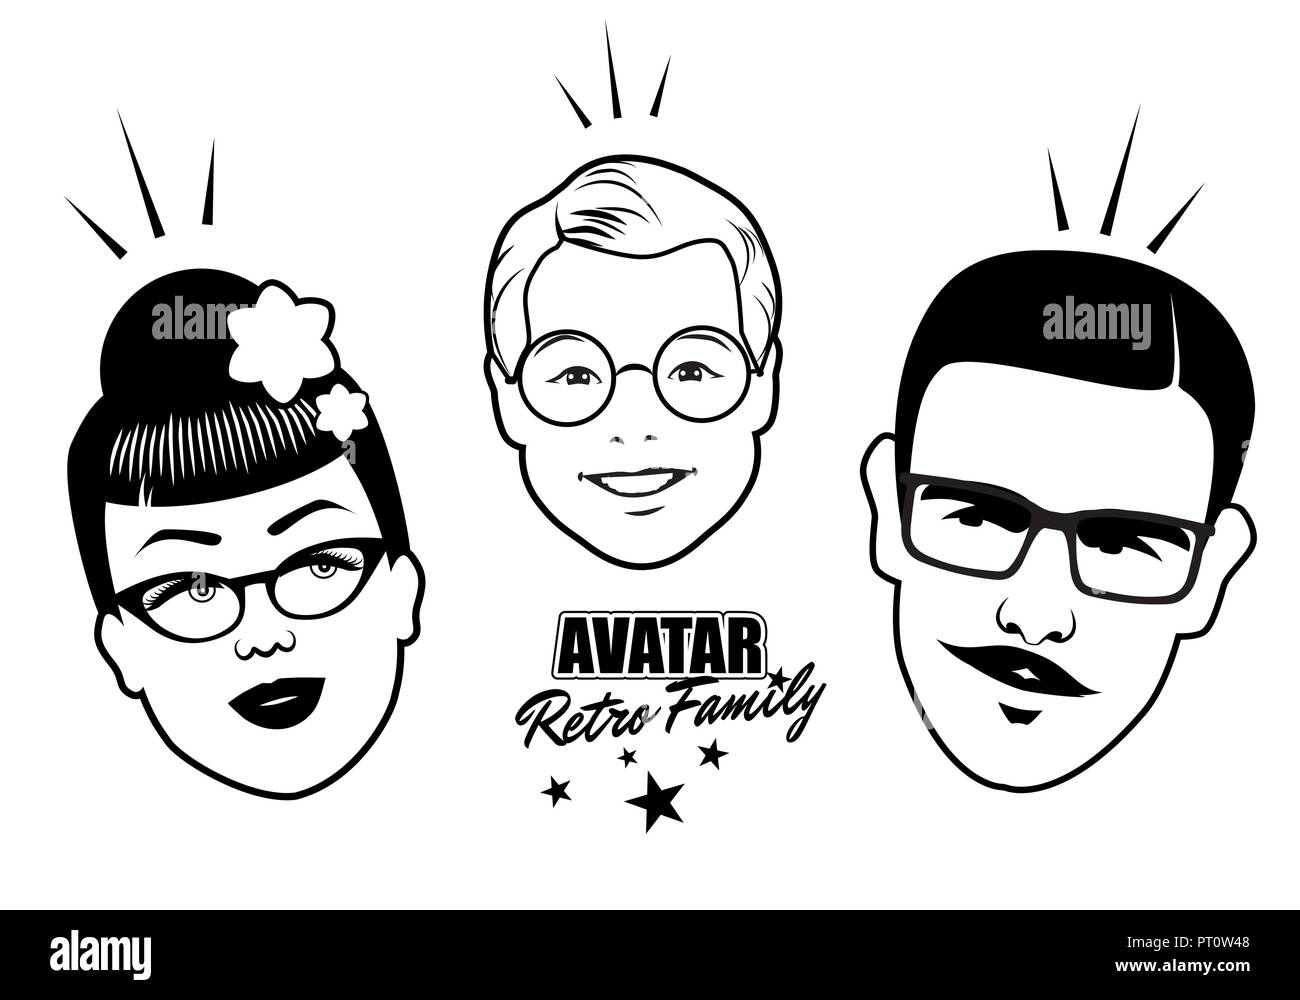 Avatar Retro Family. Cartoon faces retro style. Vector illustration. Stock Vector